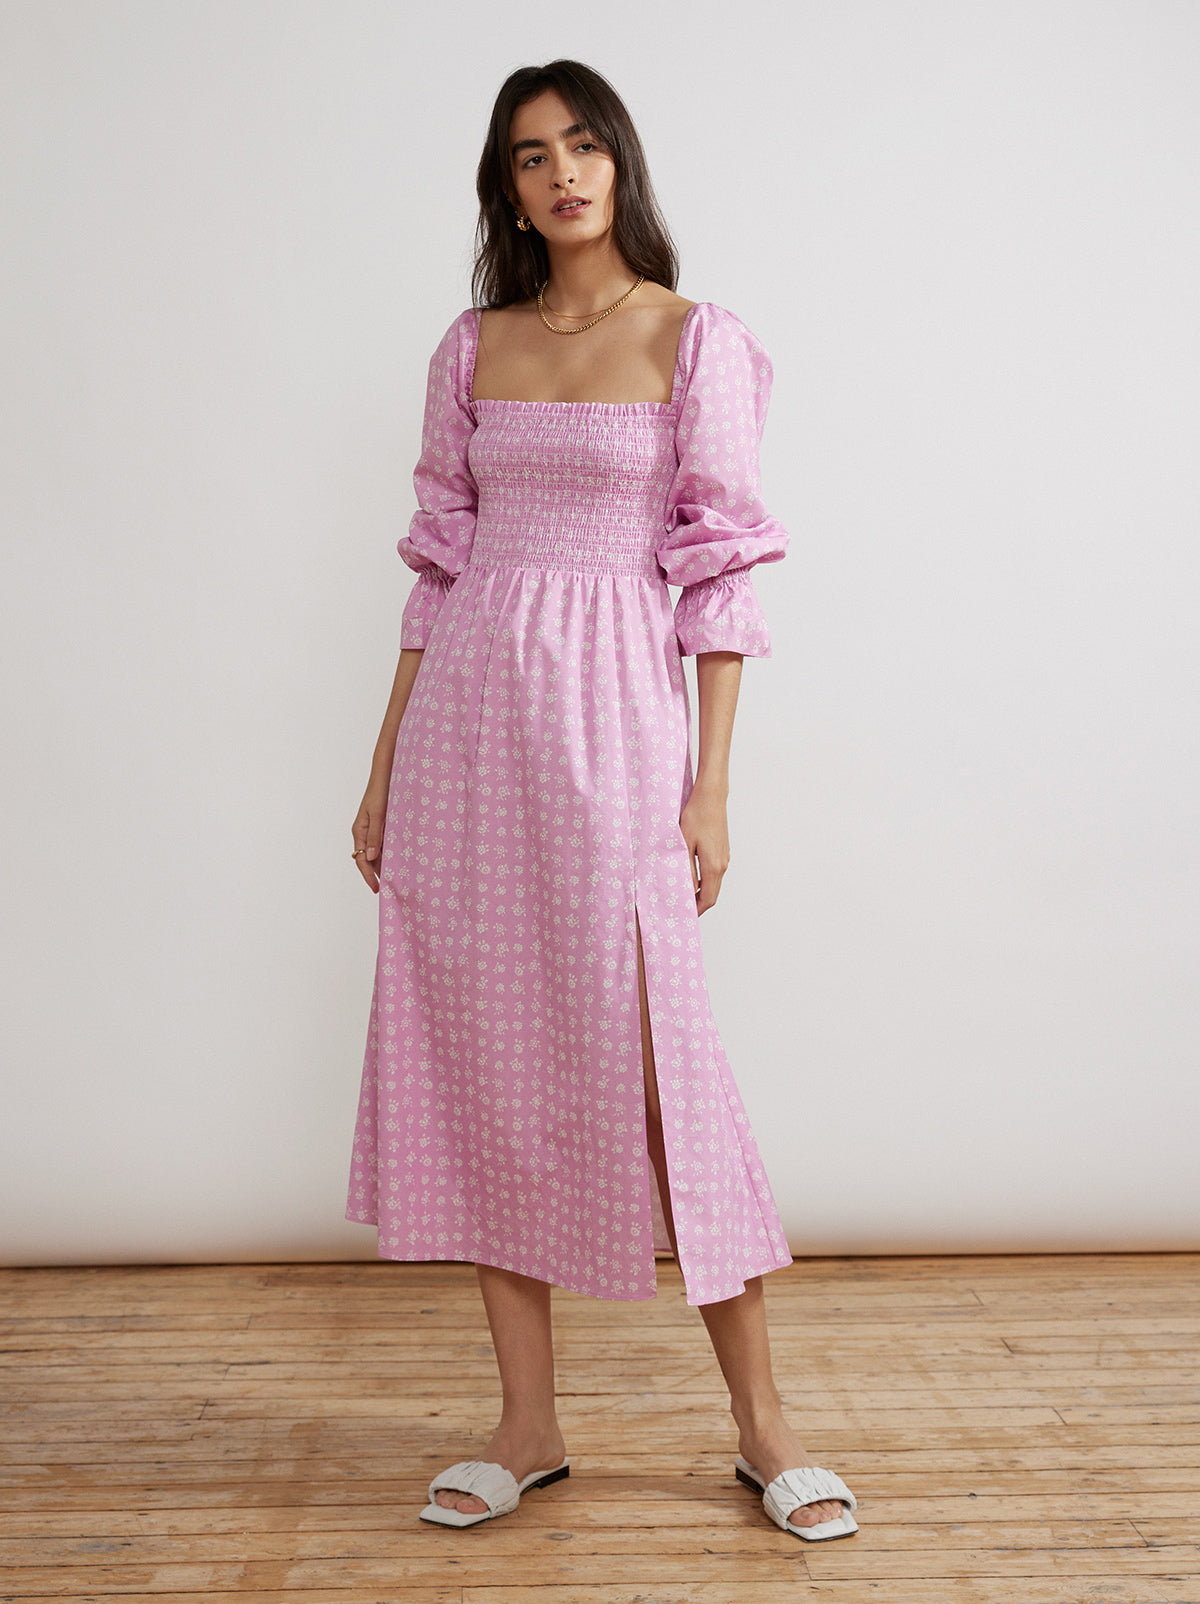 Jolene Pink Floral Shirred Cotton Dress By KITRI Studio